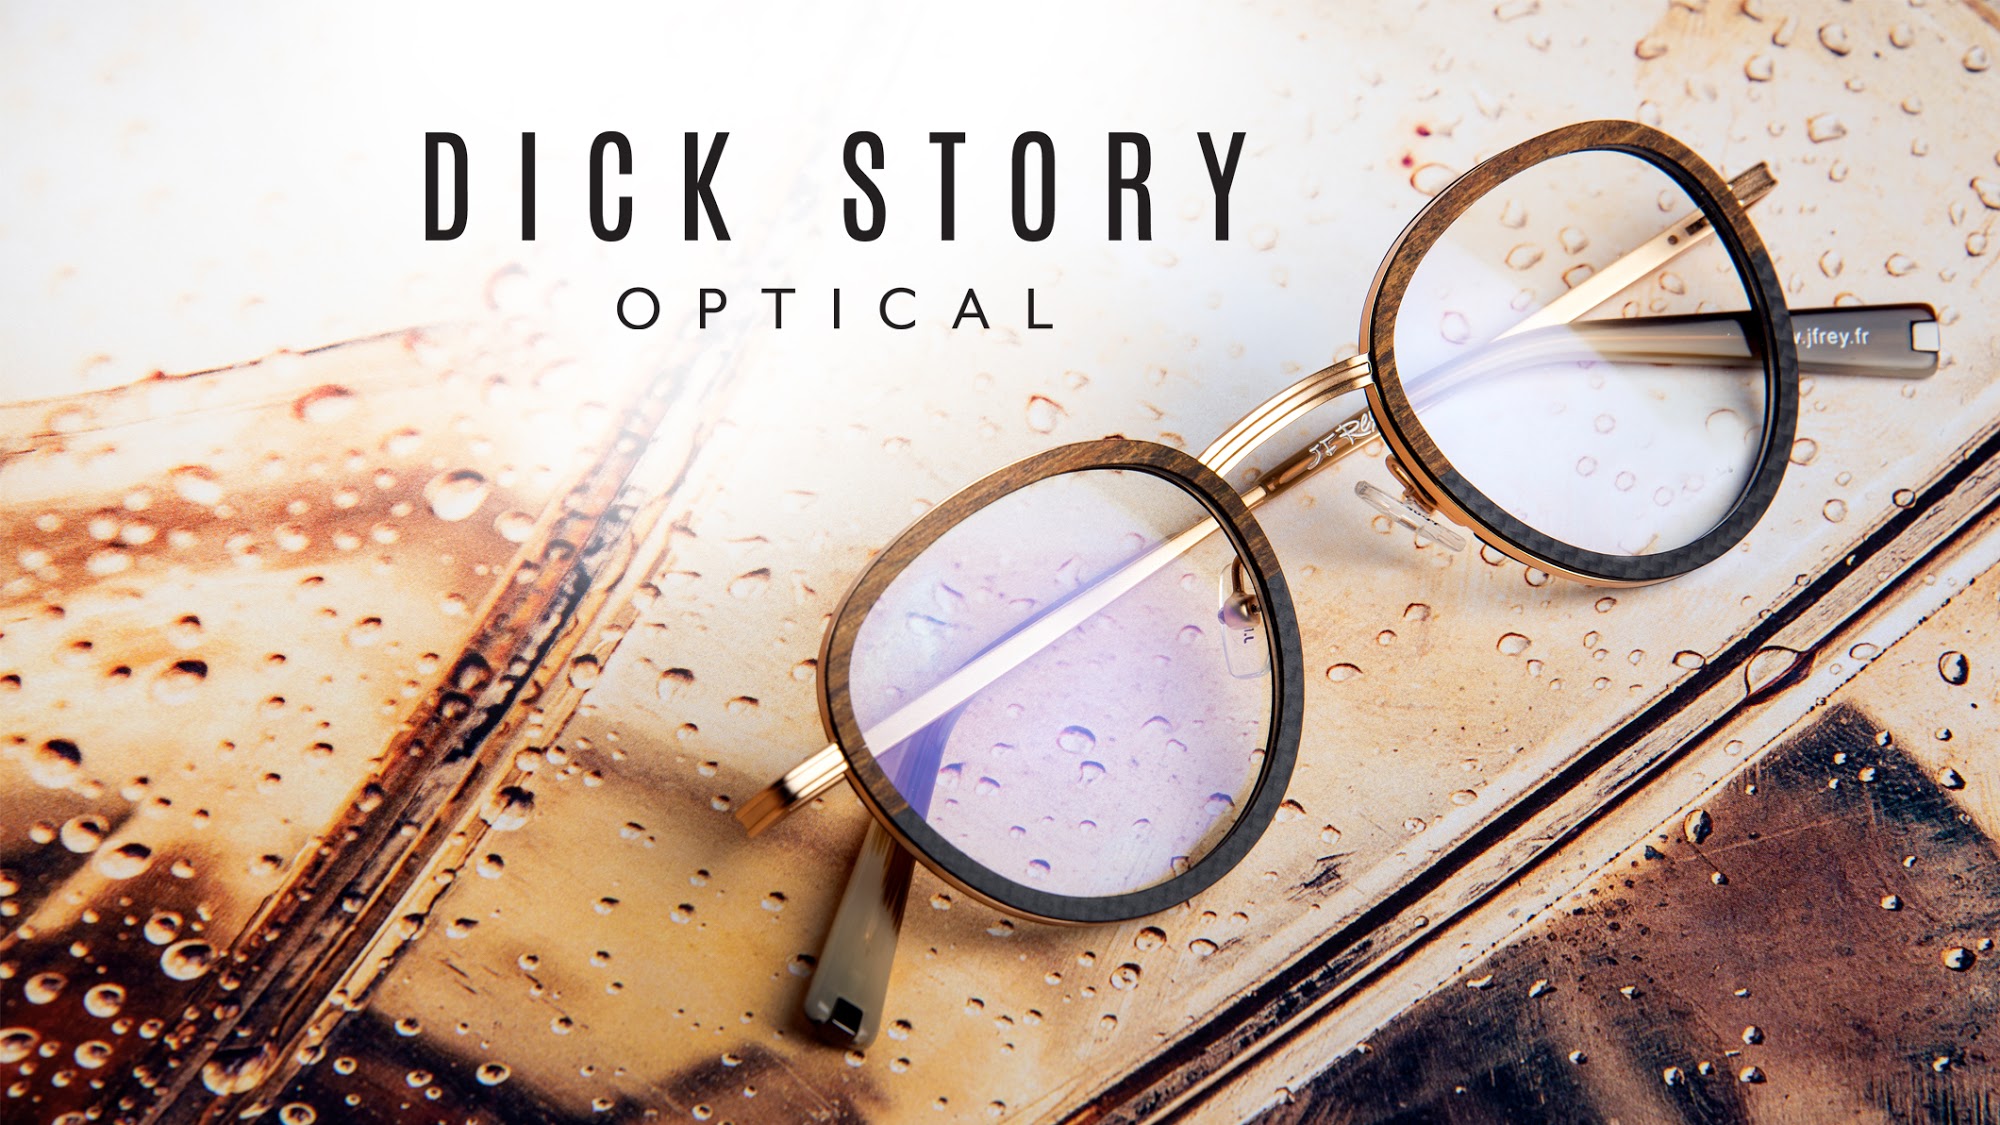 Dick Story Optical